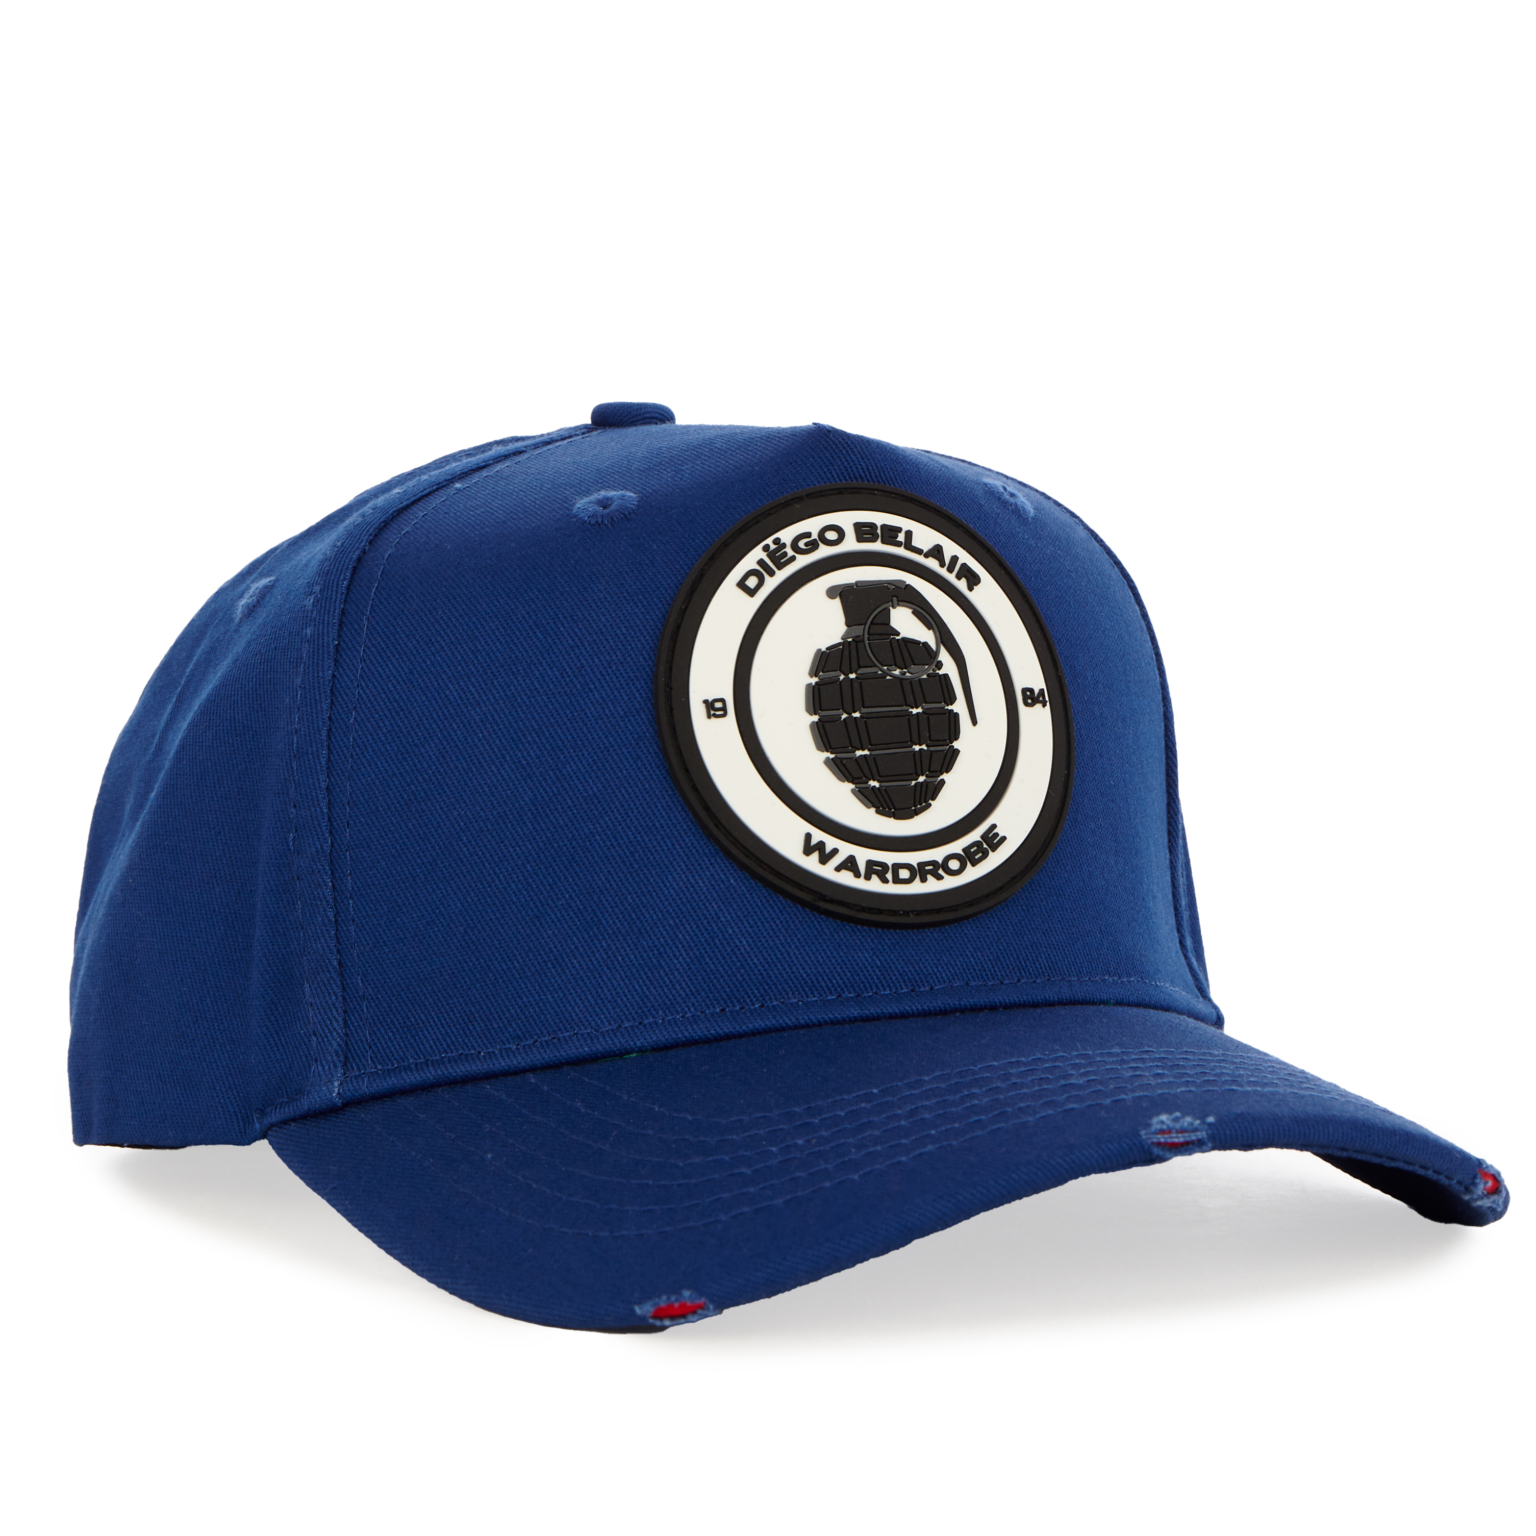 Blue Diego Belair cap with black logo